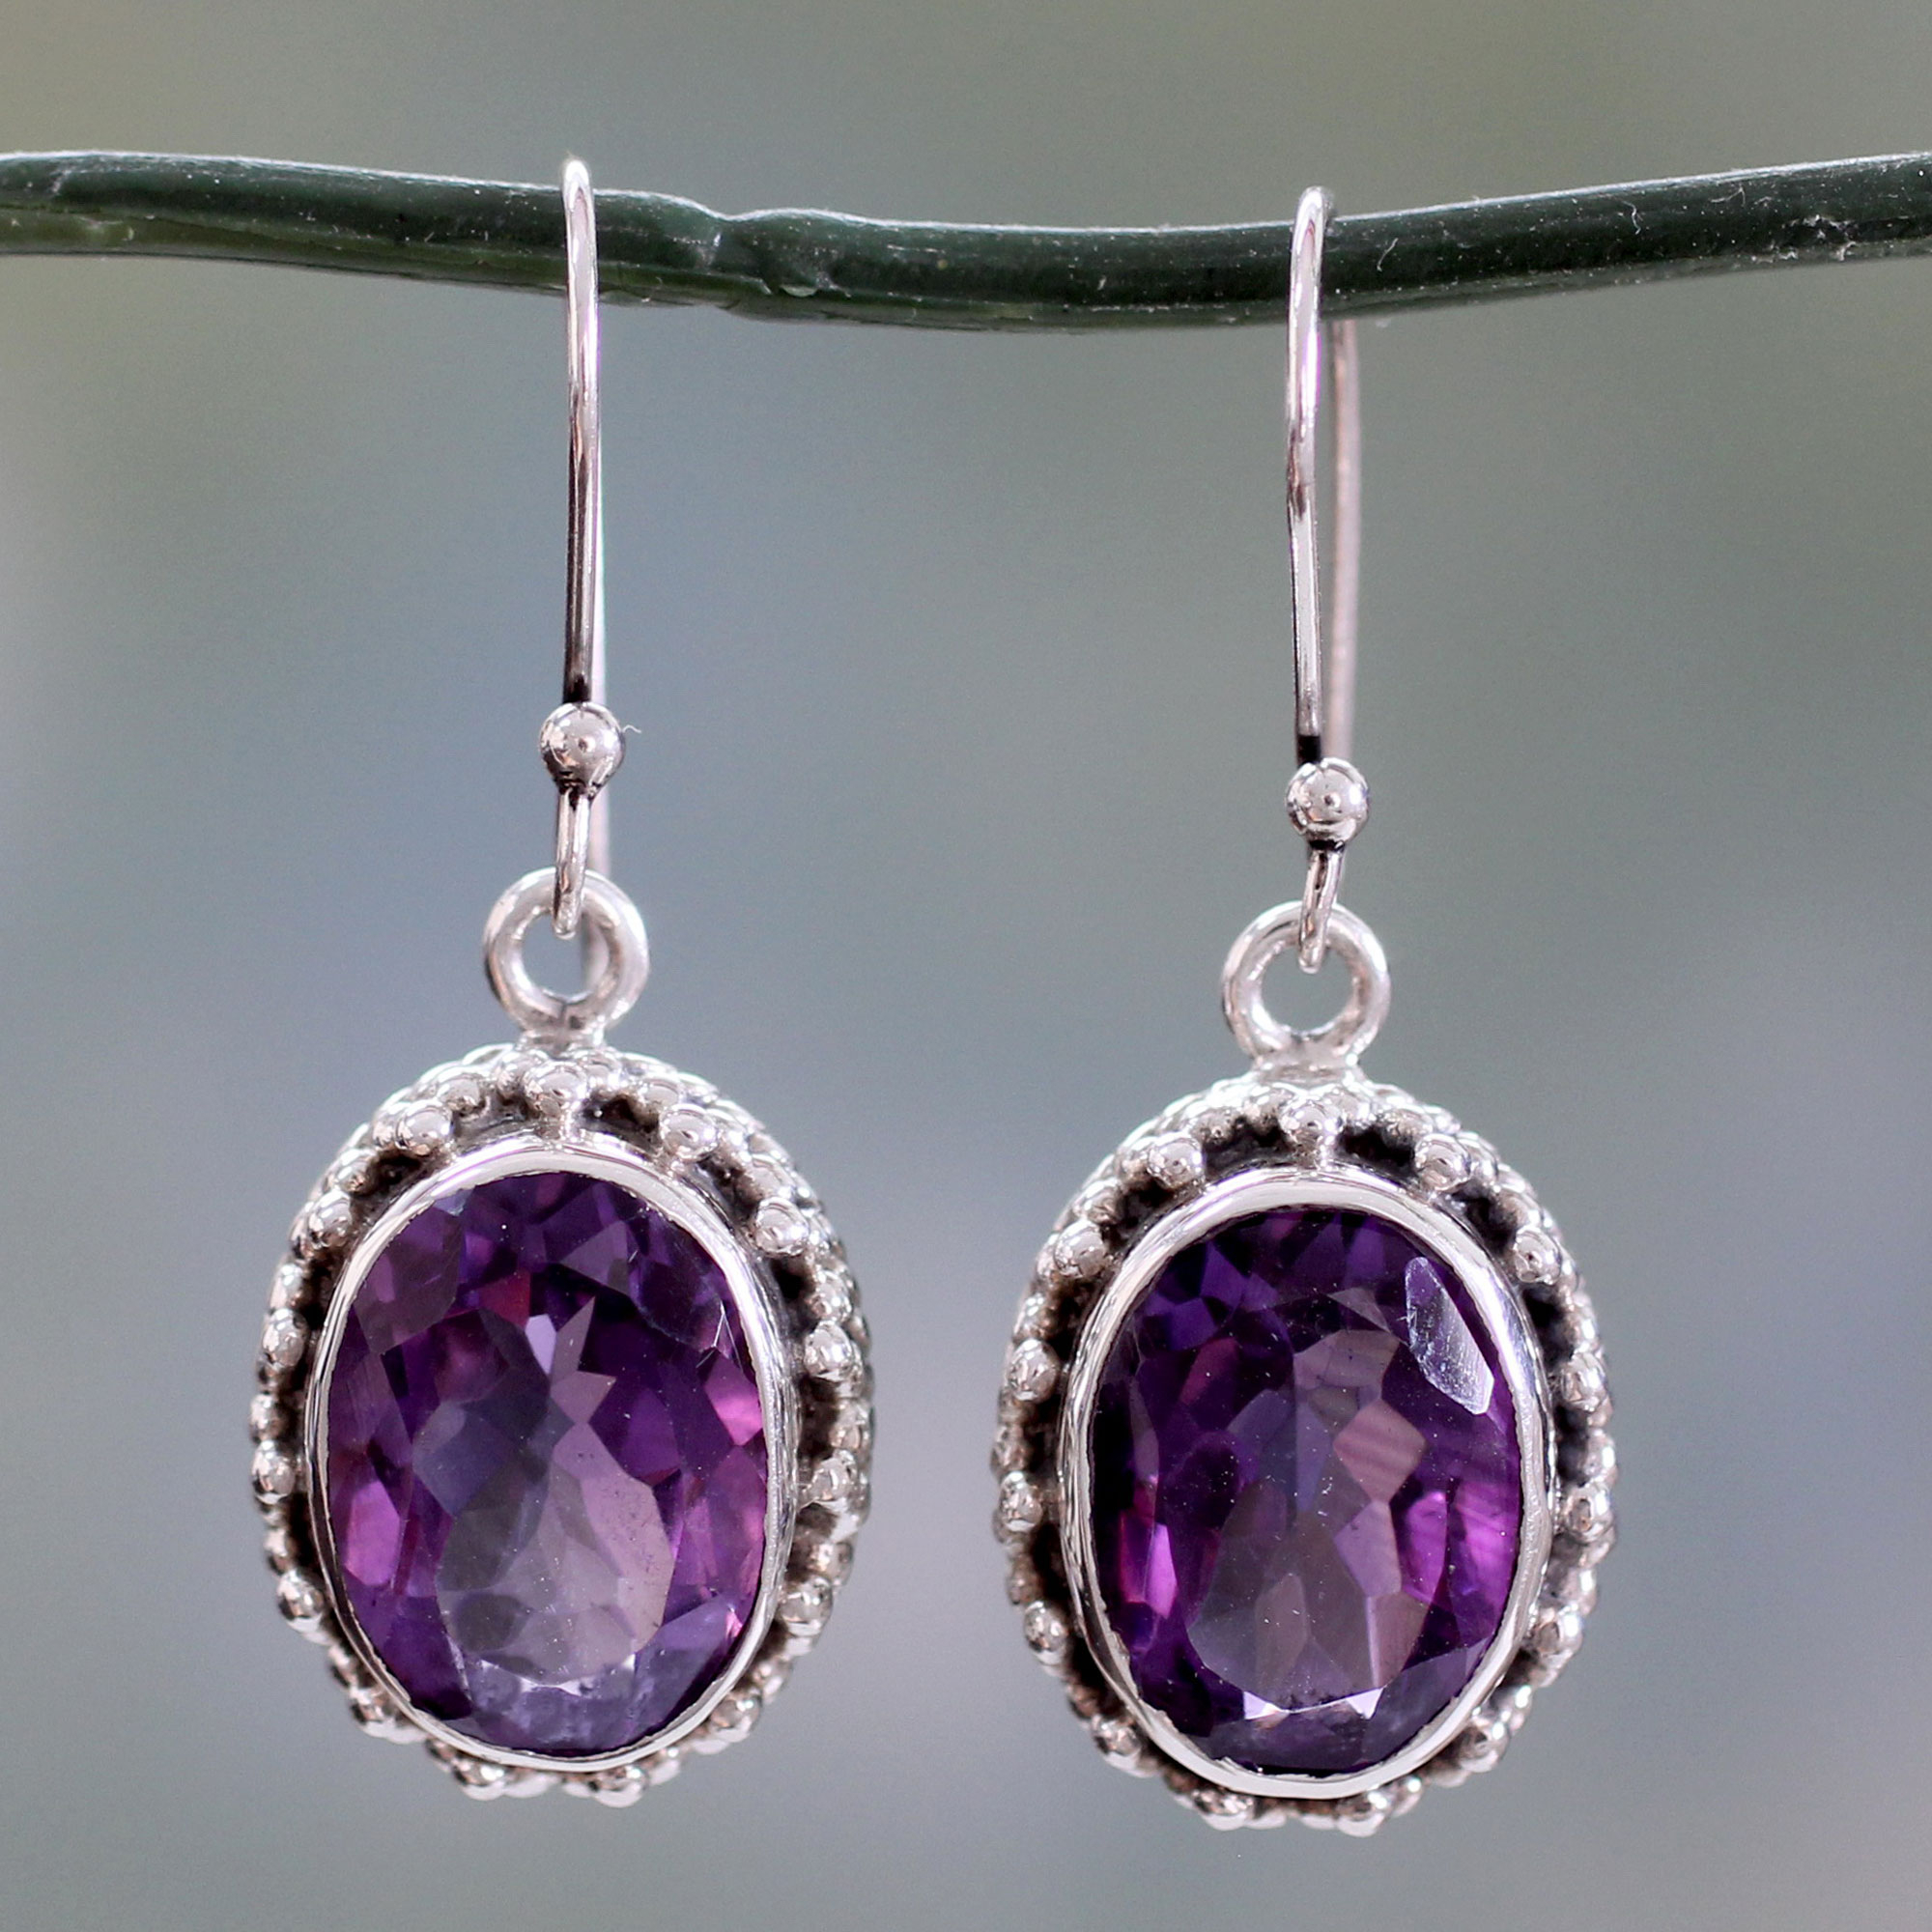 sterling silver earrings uk handmade amethyst gemstone jewellery